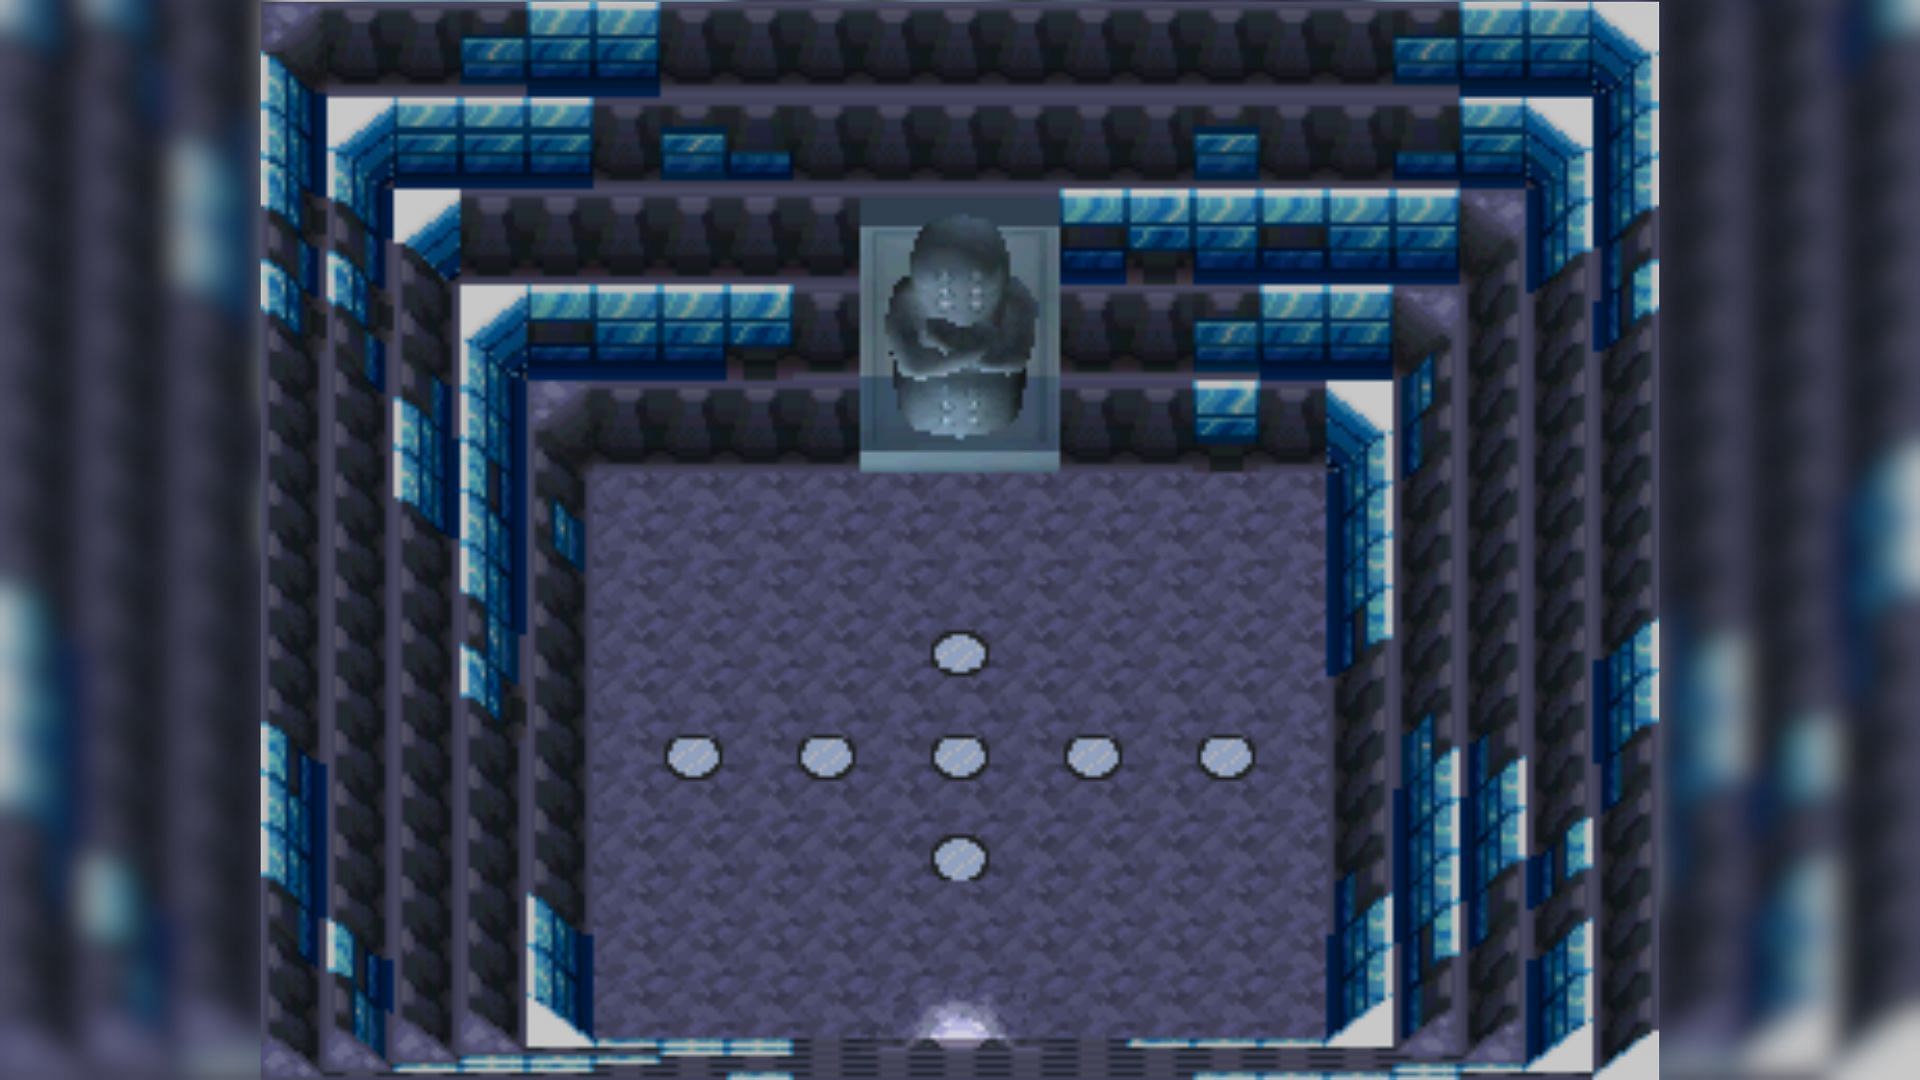 Iceburg Ruins in the game (Image via The Pokemon Company)